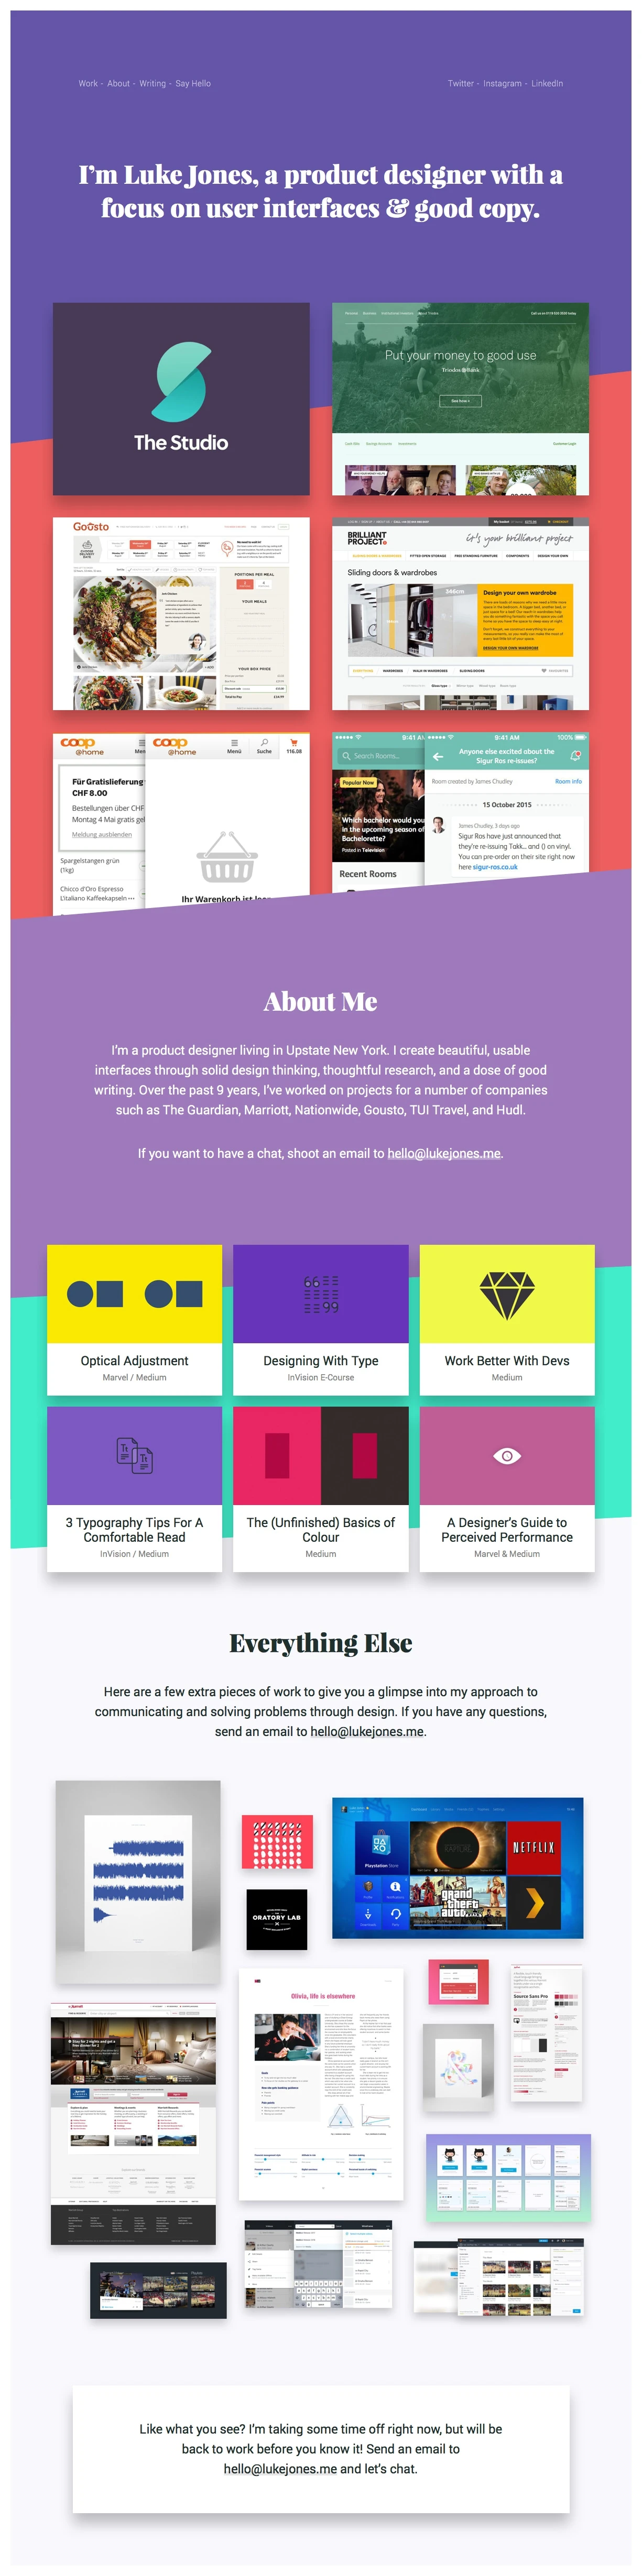 Luke Jones Landing Page Example: I’m Luke Jones, a product designer with a focus on user interfaces & good copy.